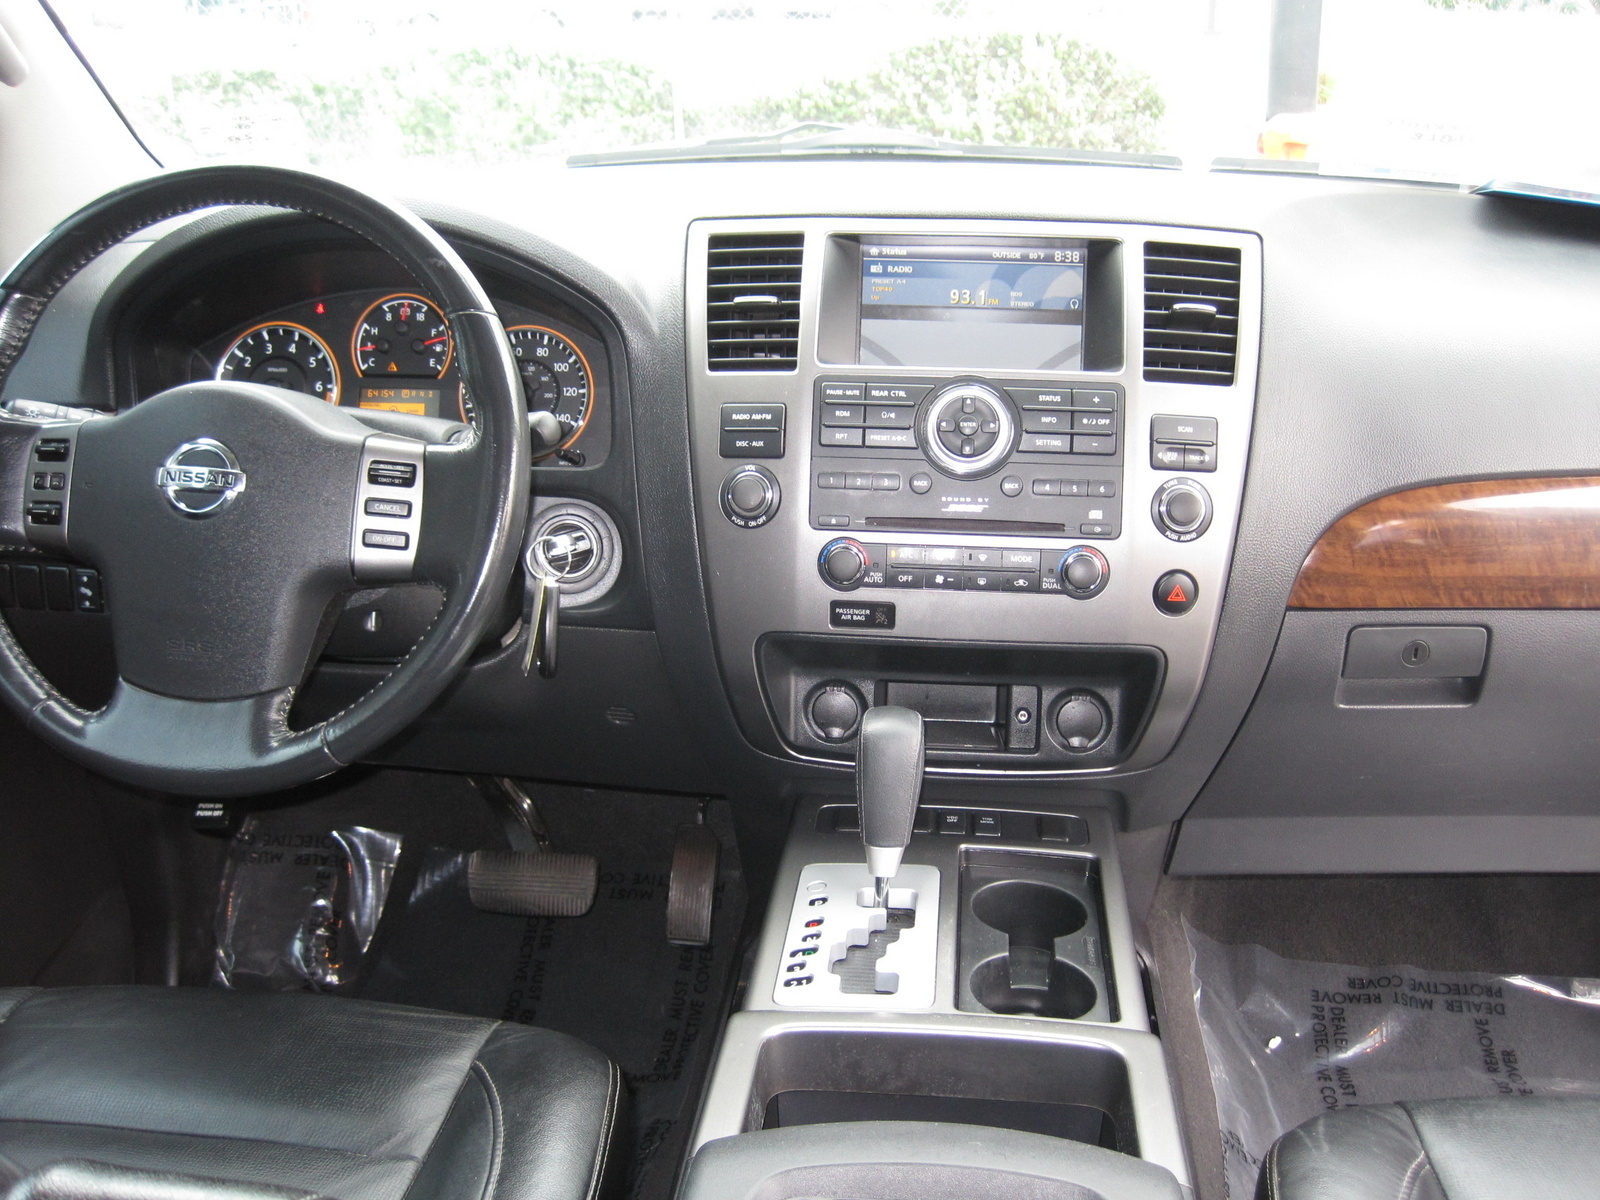 2010 Nissan armada navigation system #1